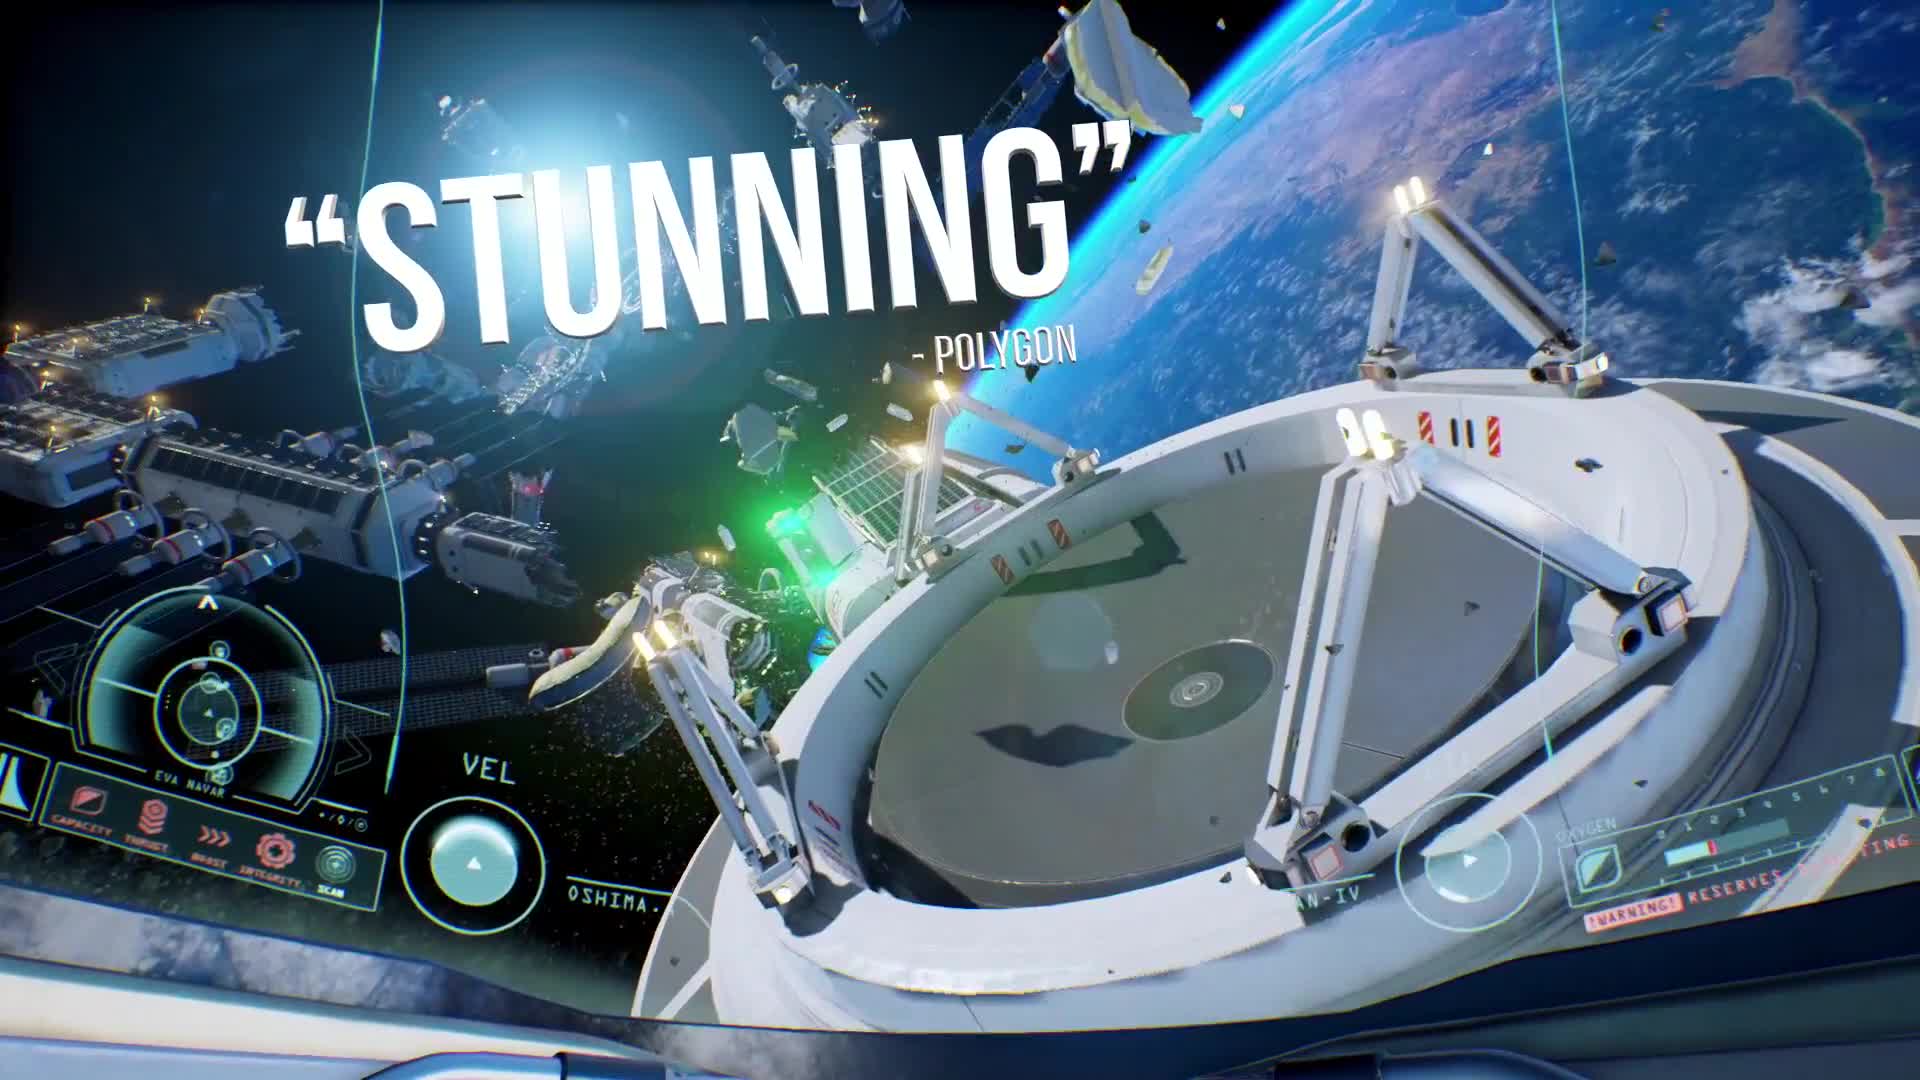 Adr1ft - Oculus trailer